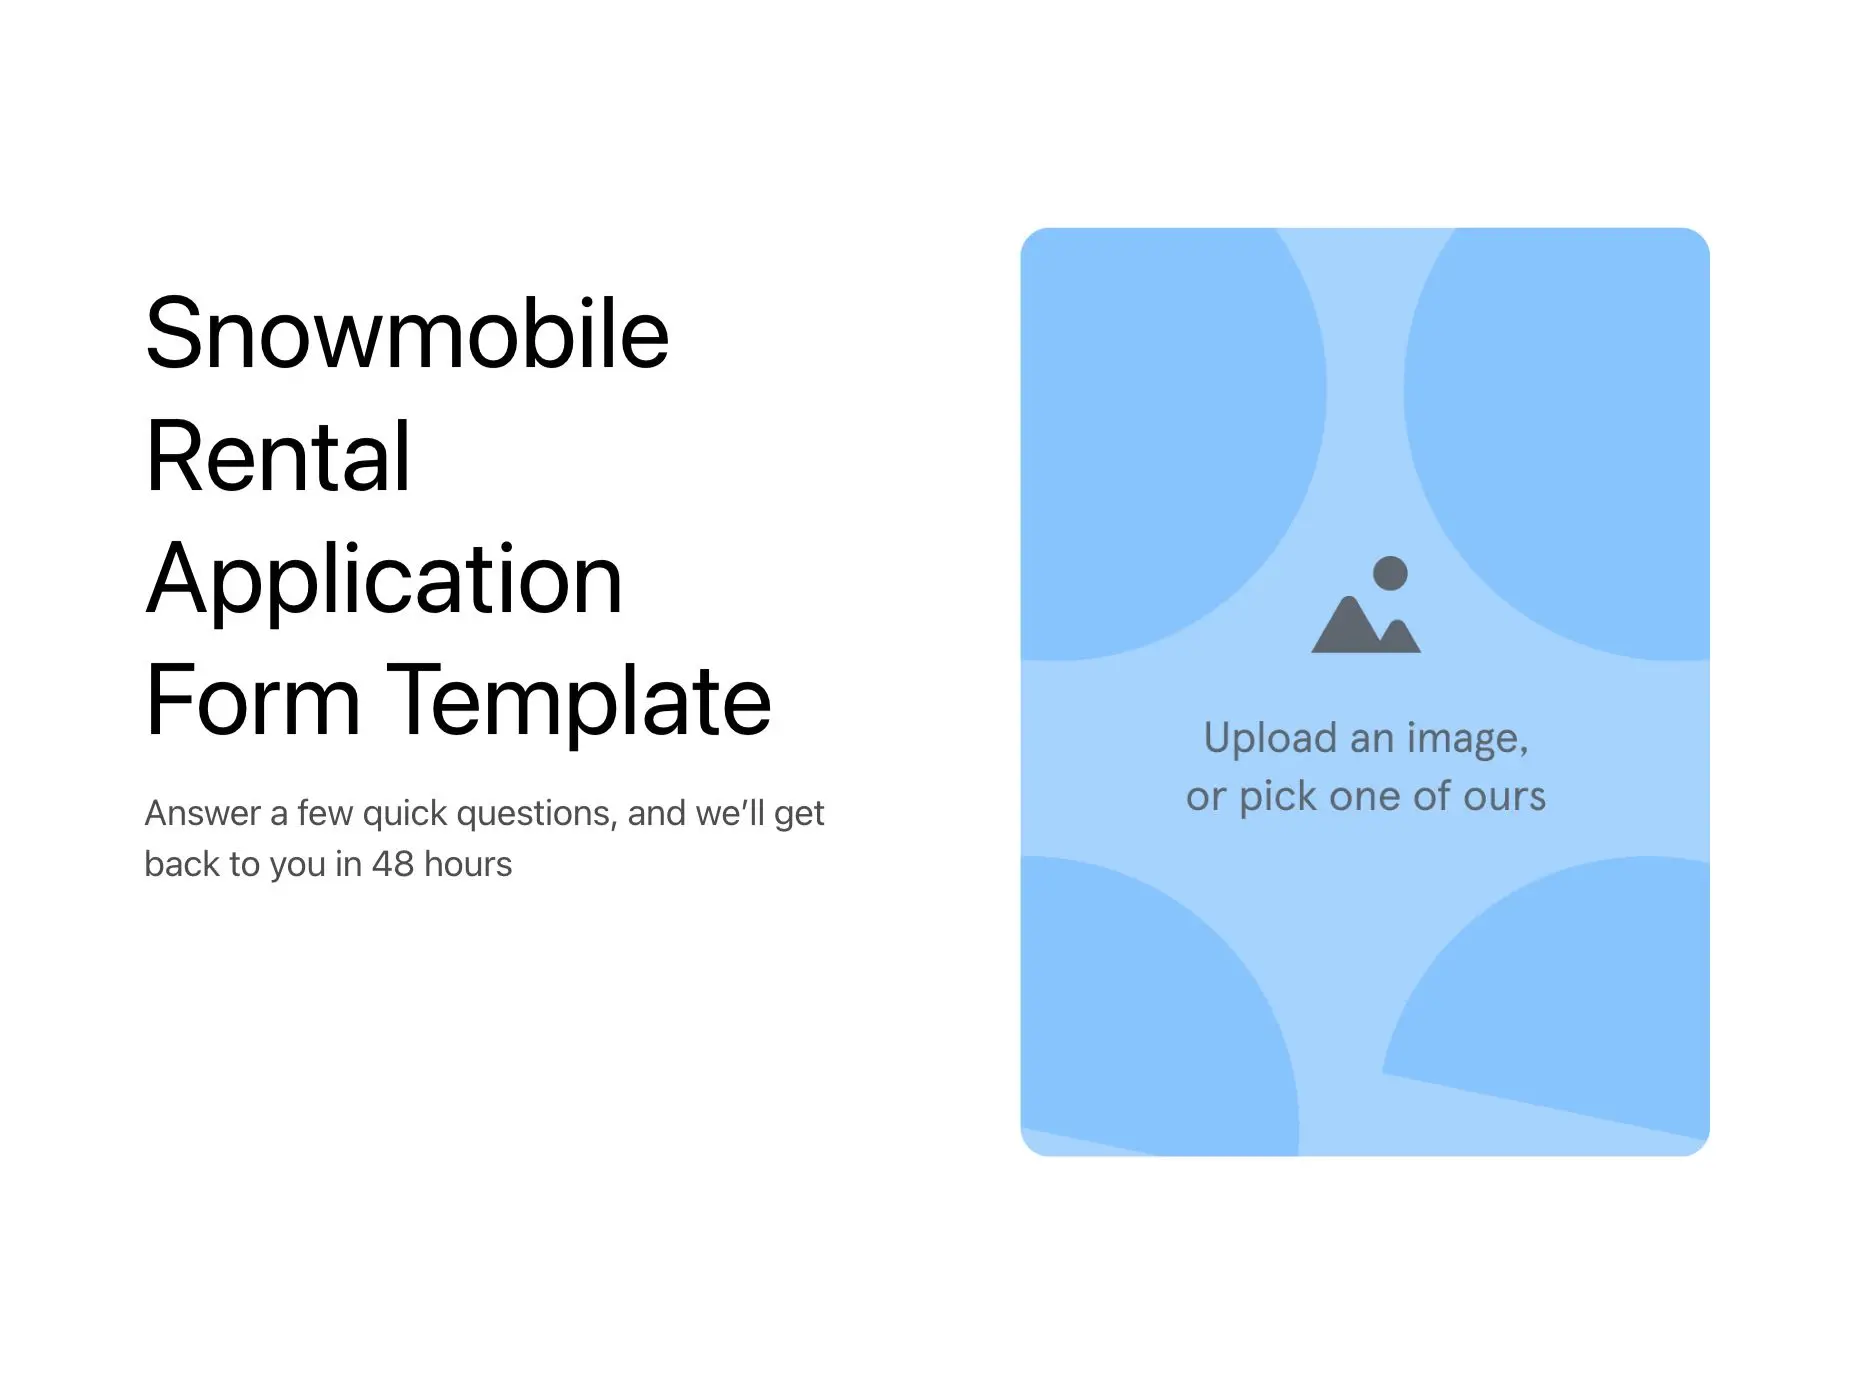 Snowmobile Rental Application Form Template Hero